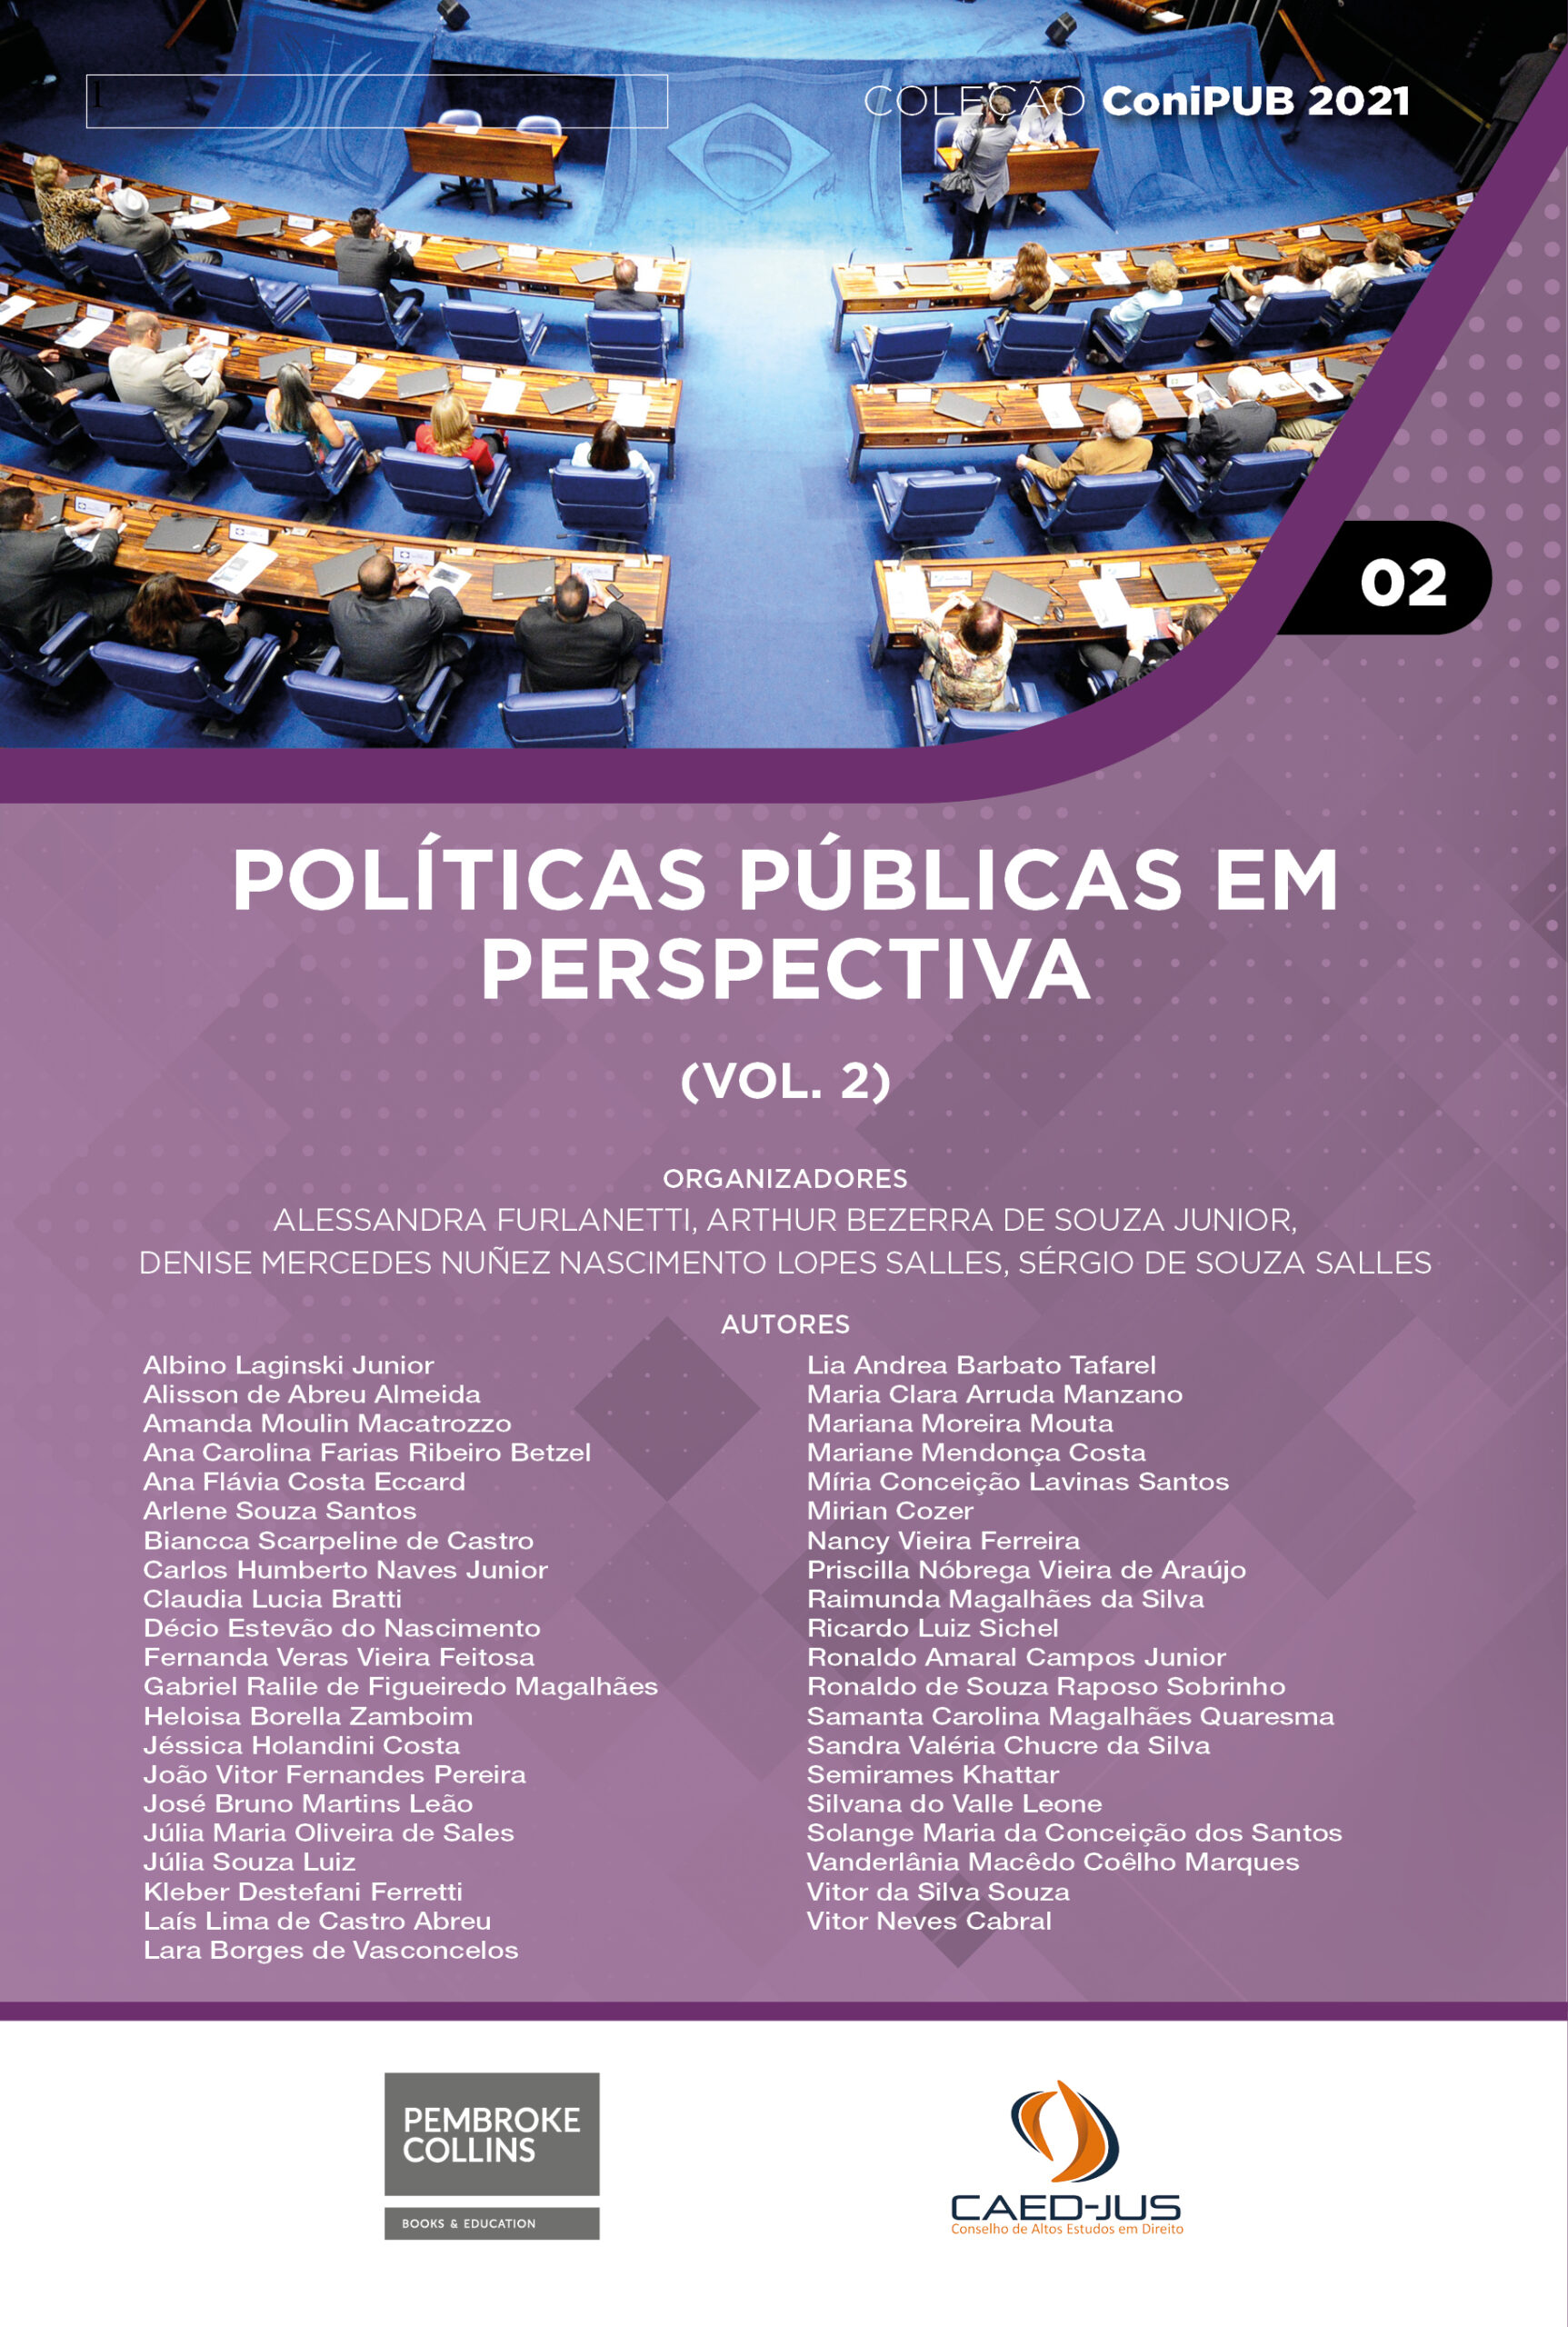 CONIPUB-2021-02-capa-Politicas-publicas-em-perspectiva-vol-2-Pembroke-Collins